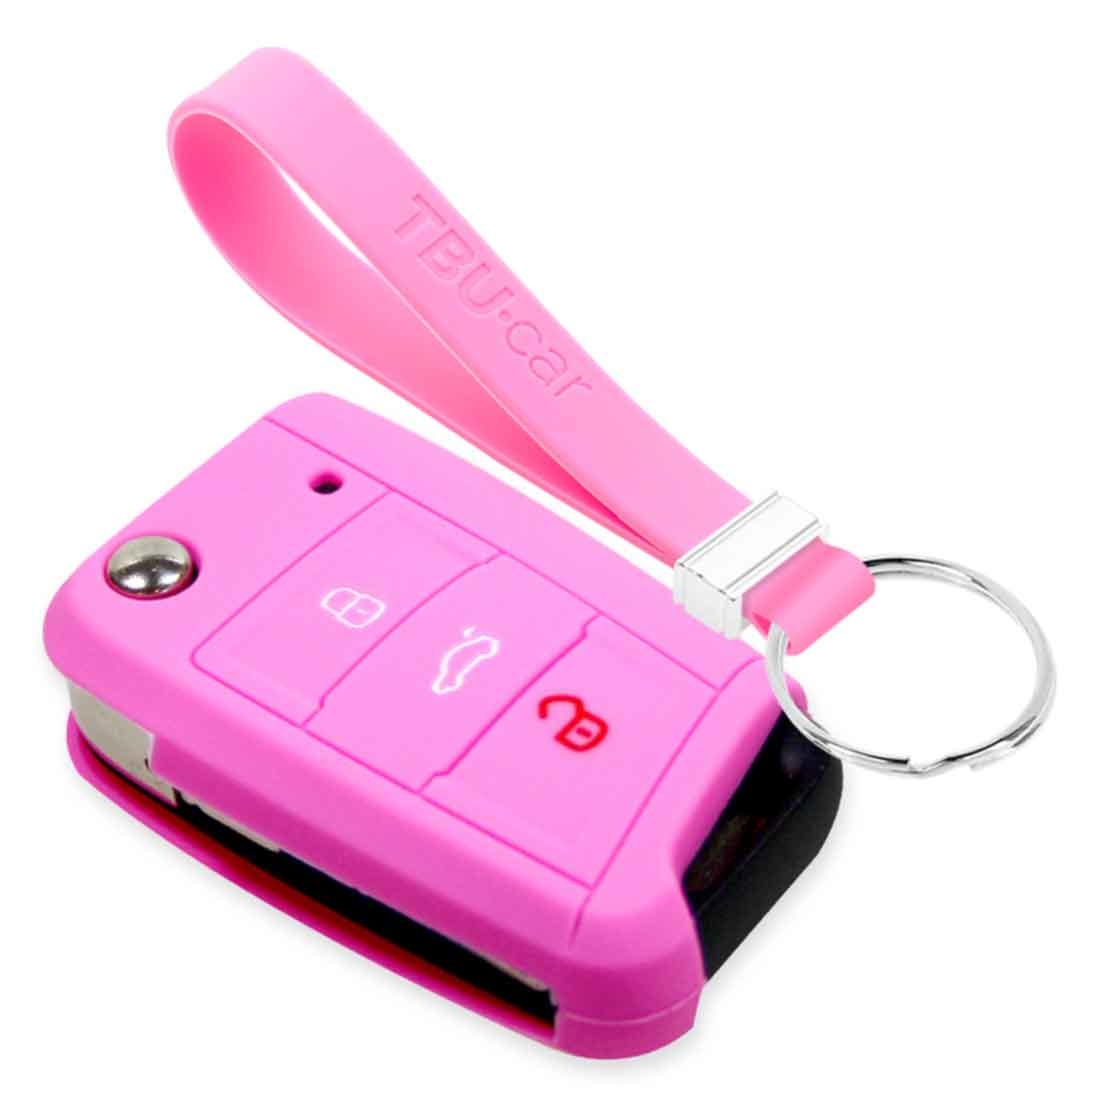 TBU car TBU car Autoschlüssel Hülle kompatibel mit Skoda 3 Tasten - Schutzhülle aus Silikon - Auto Schlüsselhülle Cover in Rosa